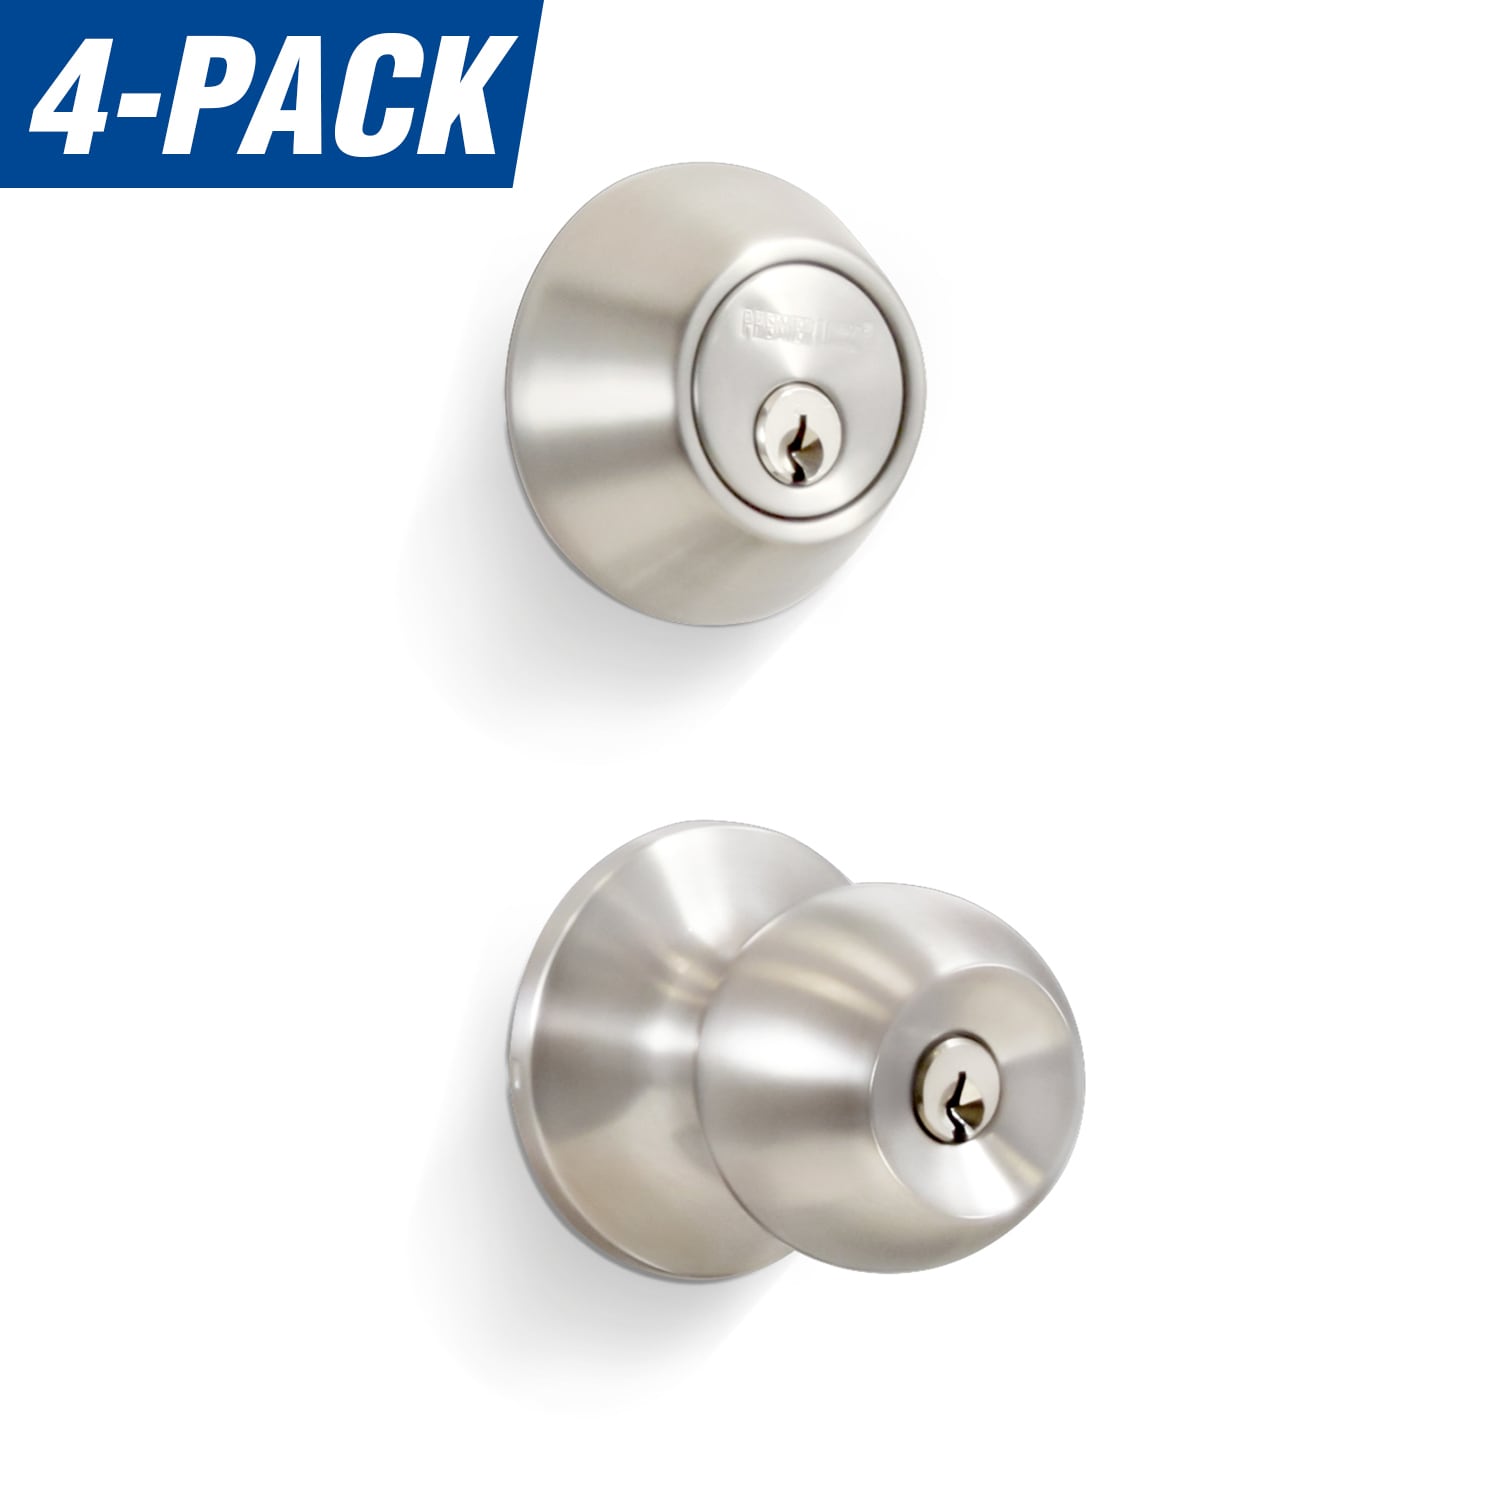 Premier Lock Keyed Alike Entry Door Stainless Steel Exterior  Single-cylinder deadbolt Keyed Entry Door Knob Combo Pack (2-Pack)